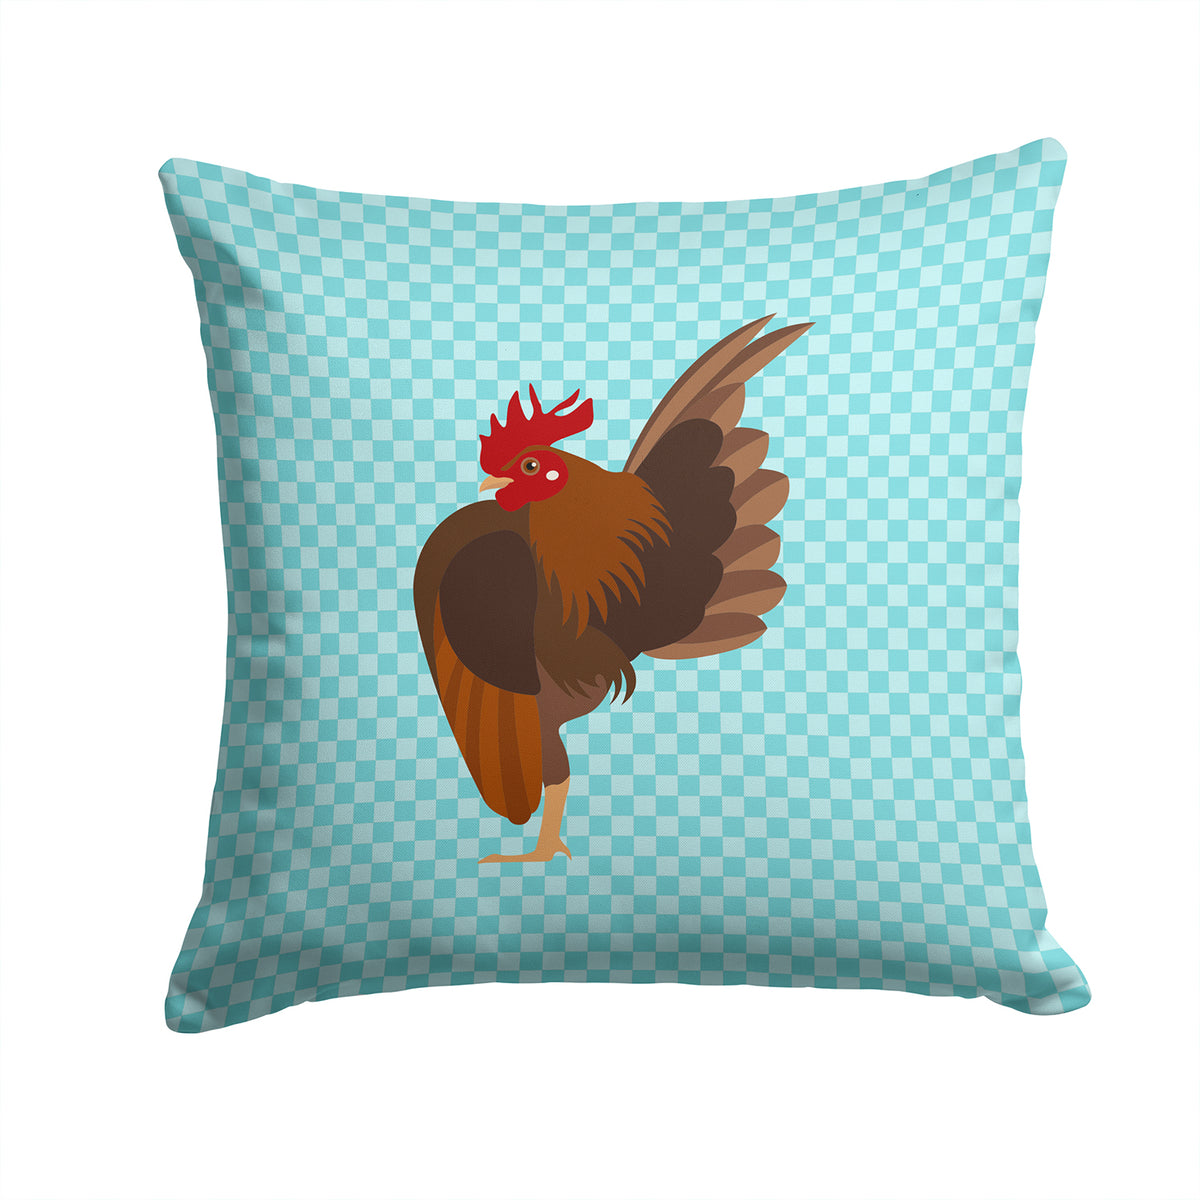 Malaysian Serama Chicken Blue Check Fabric Decorative Pillow BB8016PW1414 - the-store.com